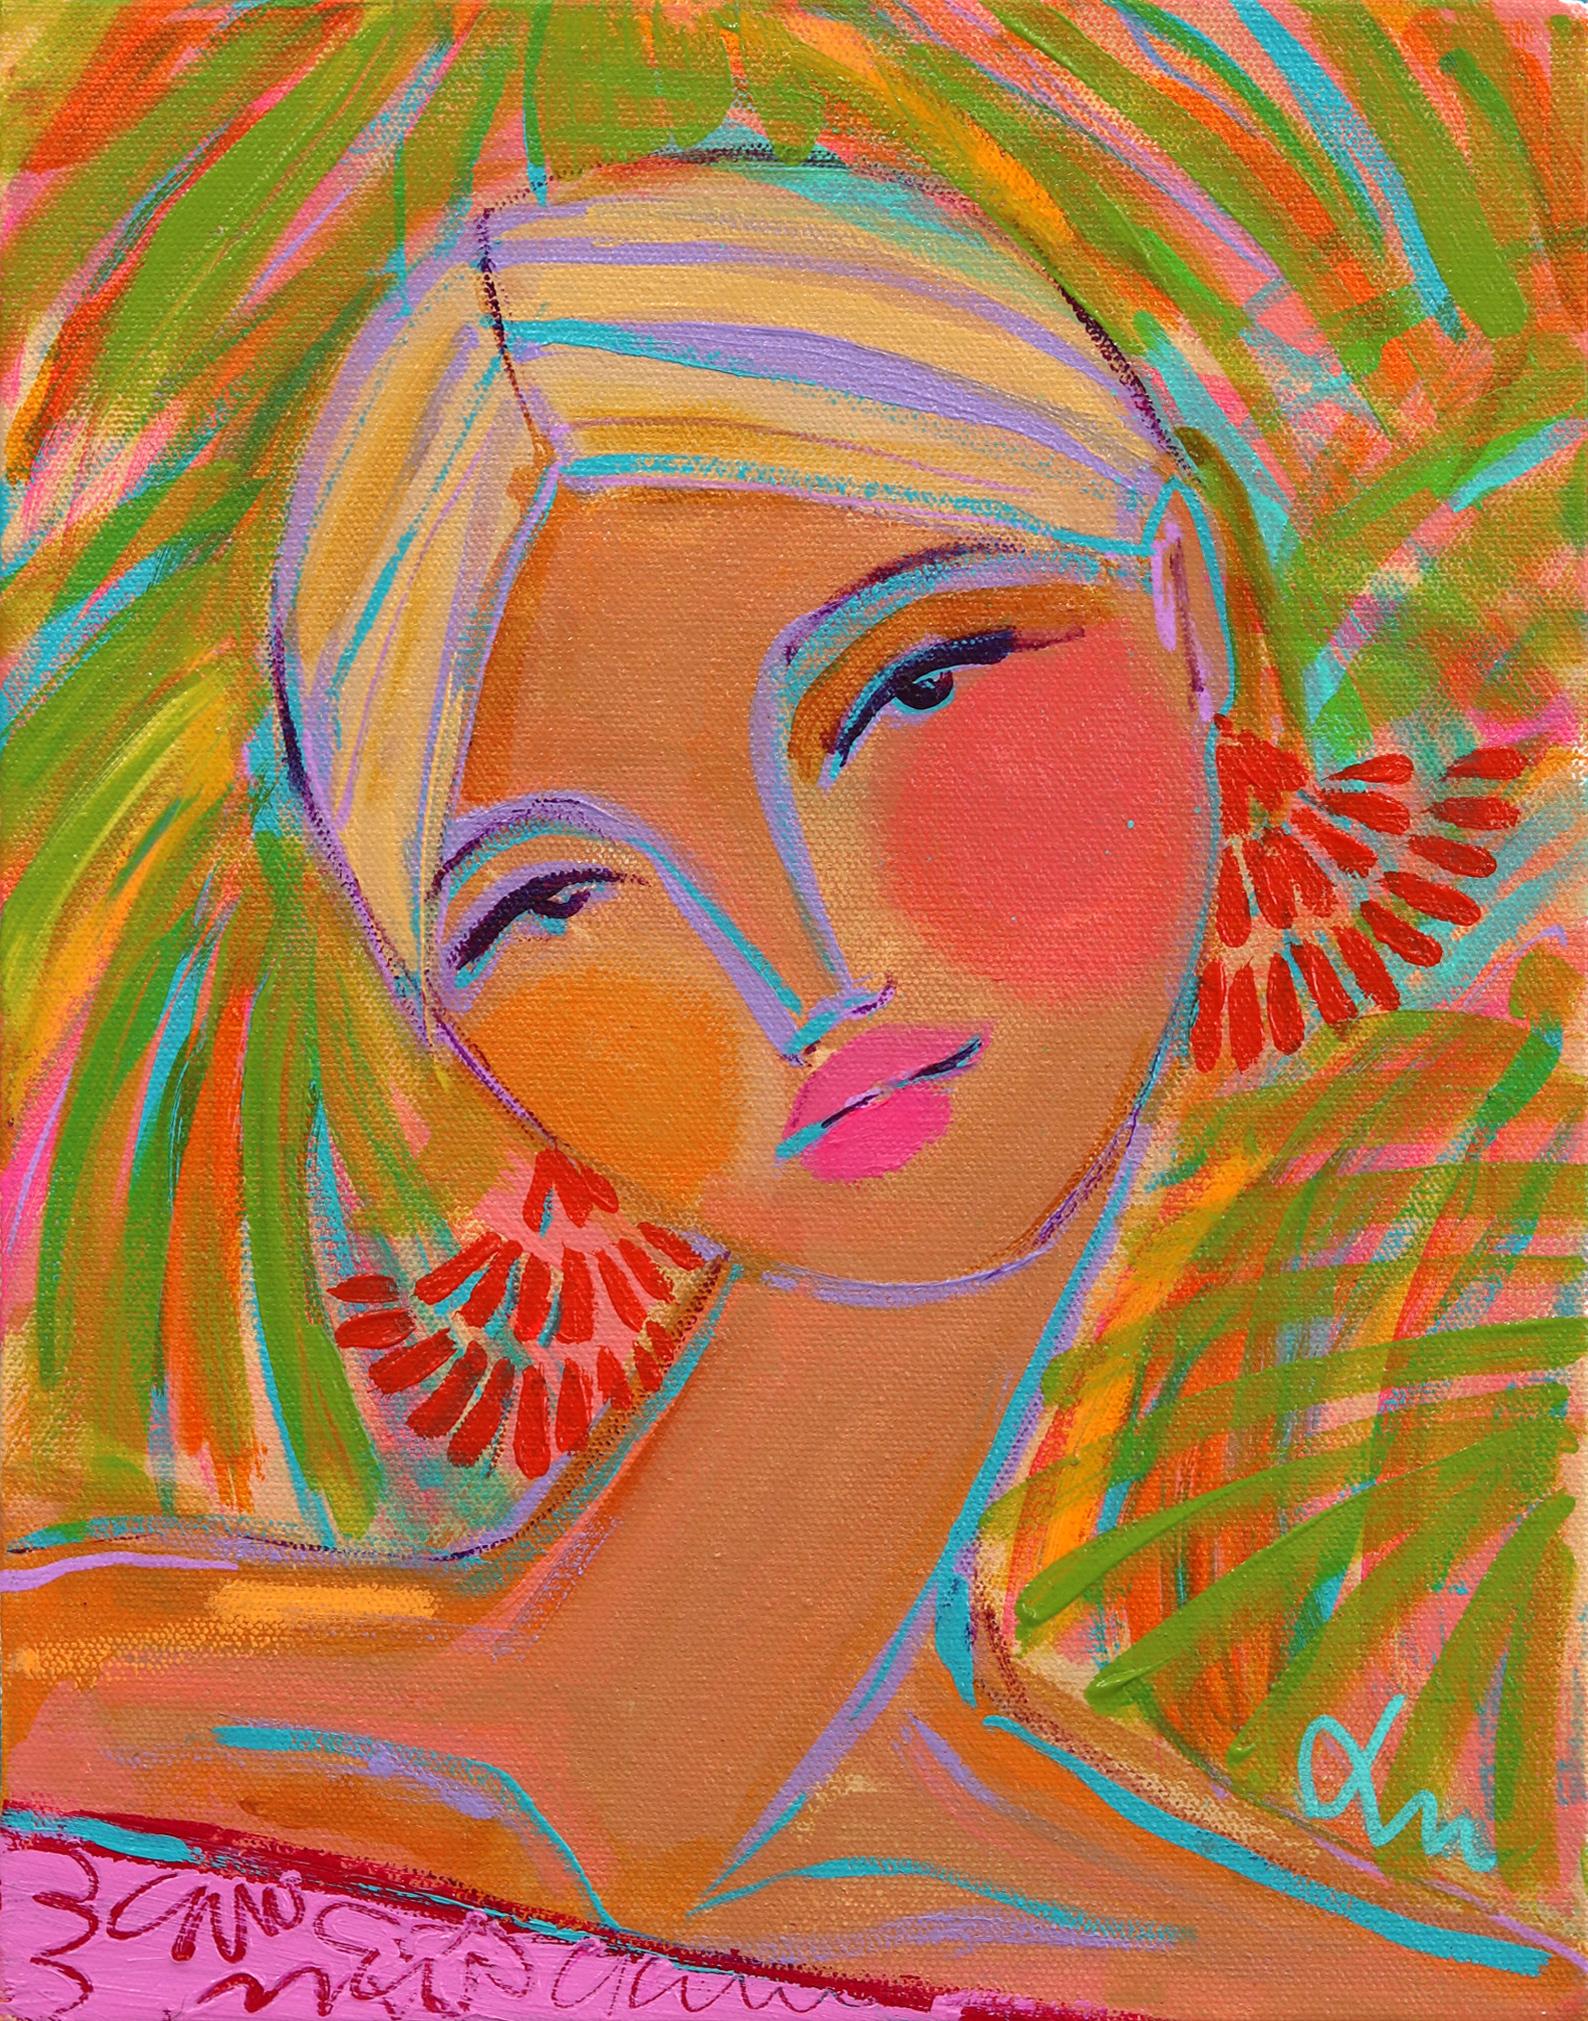 Malibu Barbie - Colorful Abstract Figurative Portrait Original Painting